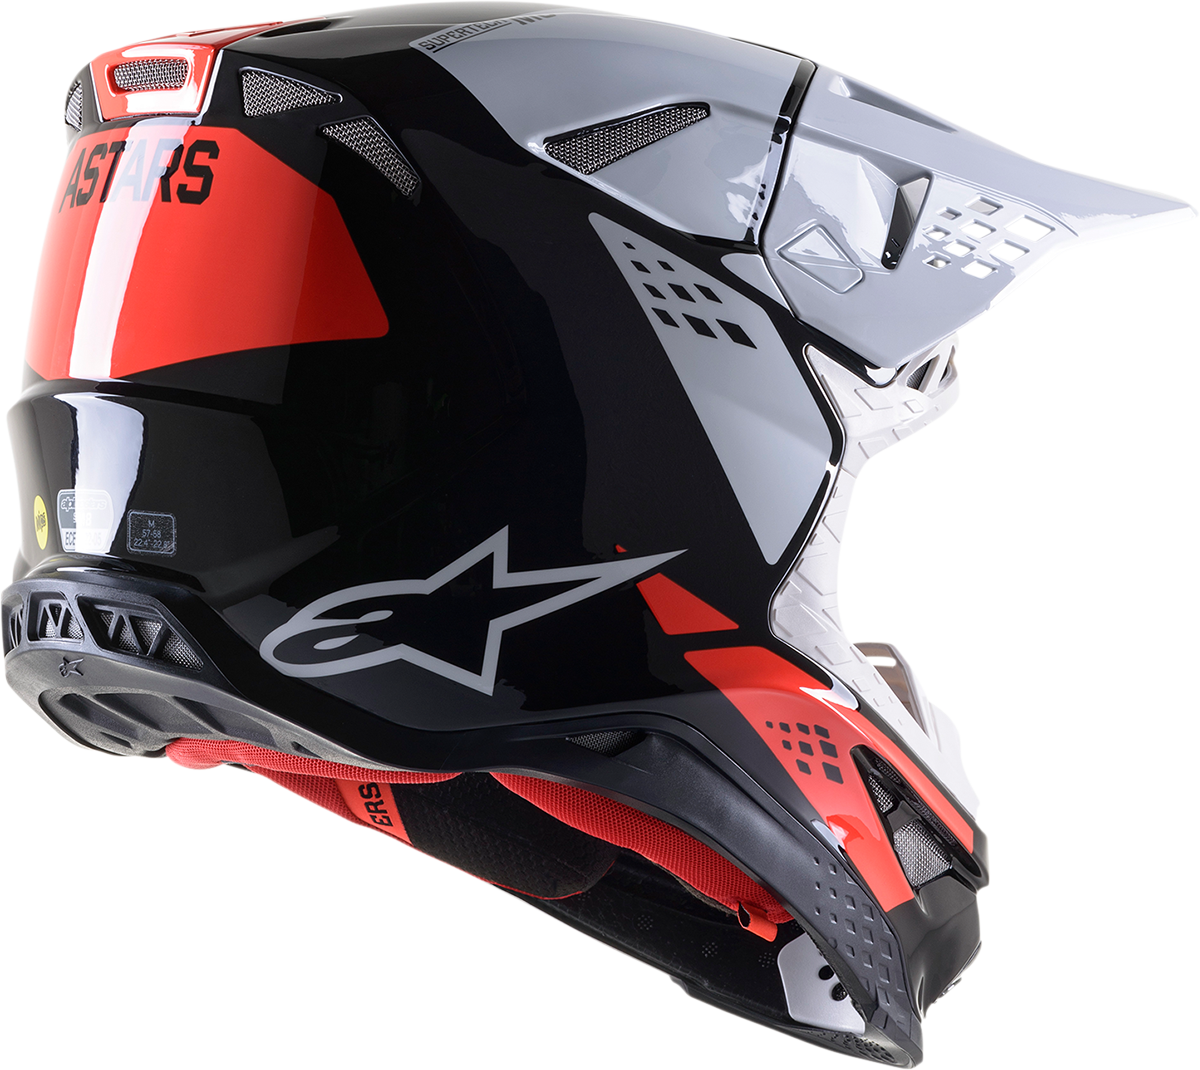 ALPINESTARS Supertech M8 Helmet - Factory - Black/White/Red - Small 8302922-1233-SM